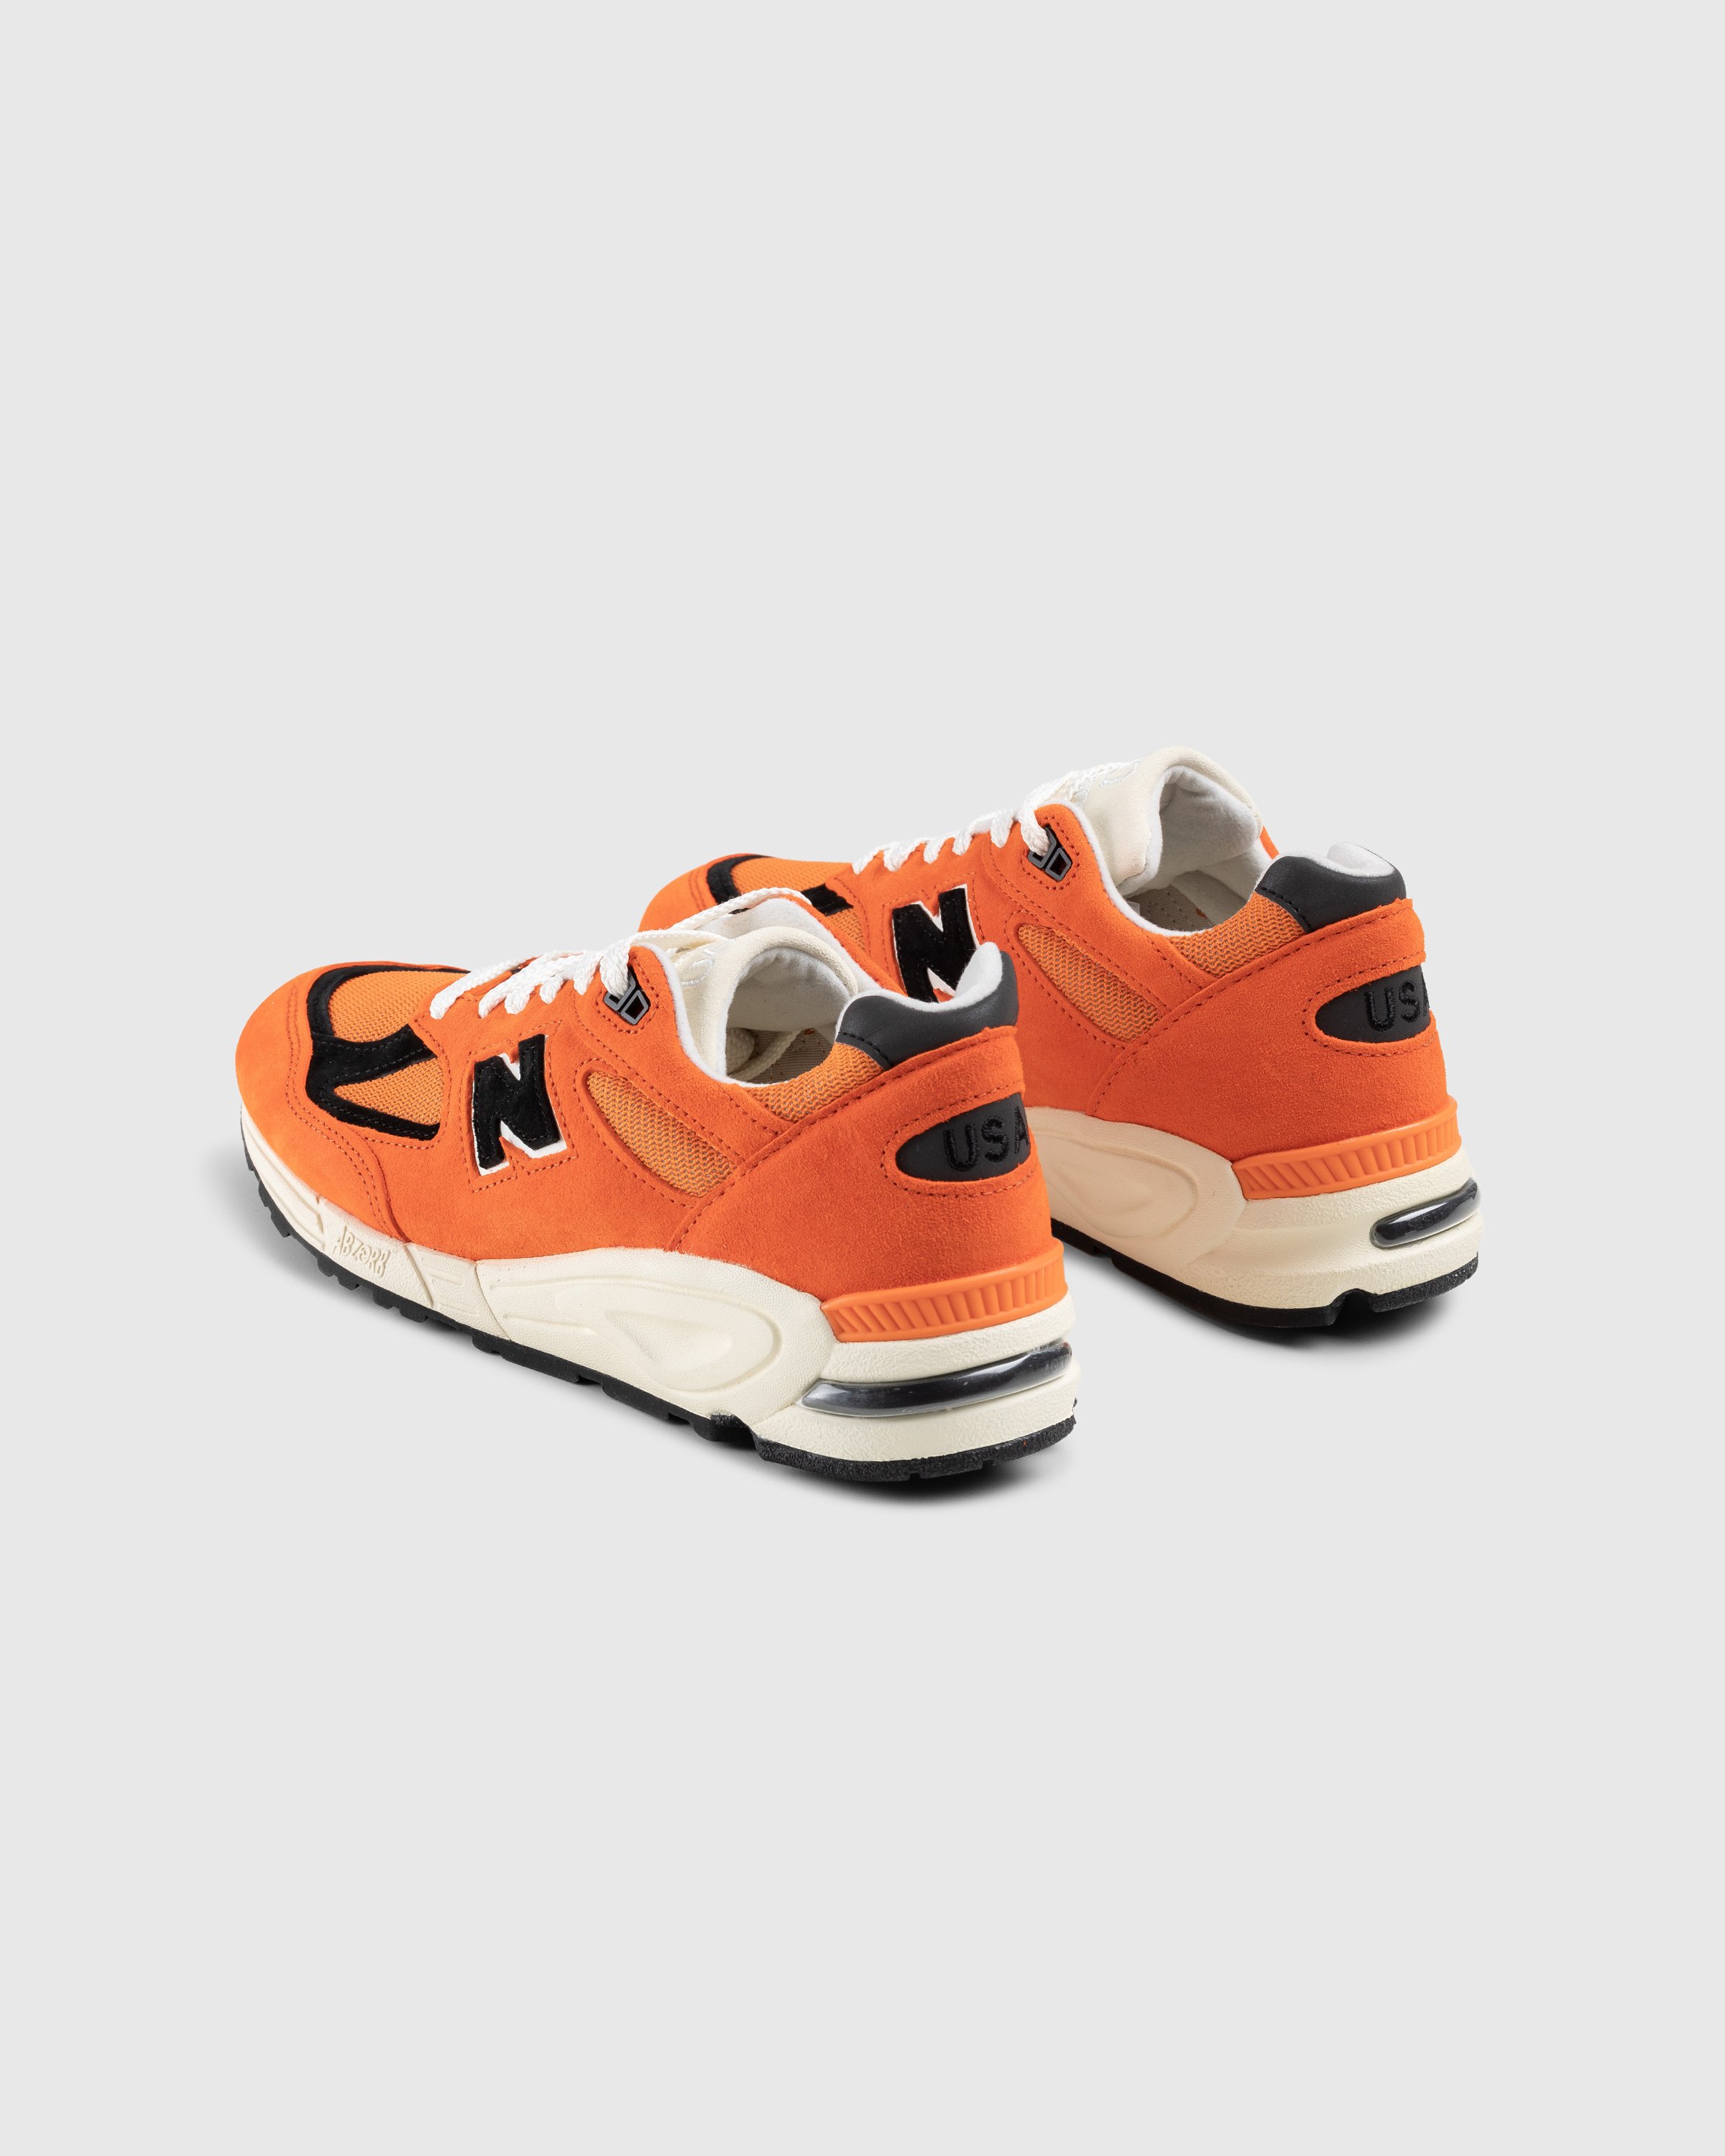 New Balance - M990AI2 Orange - Footwear - Orange - Image 4